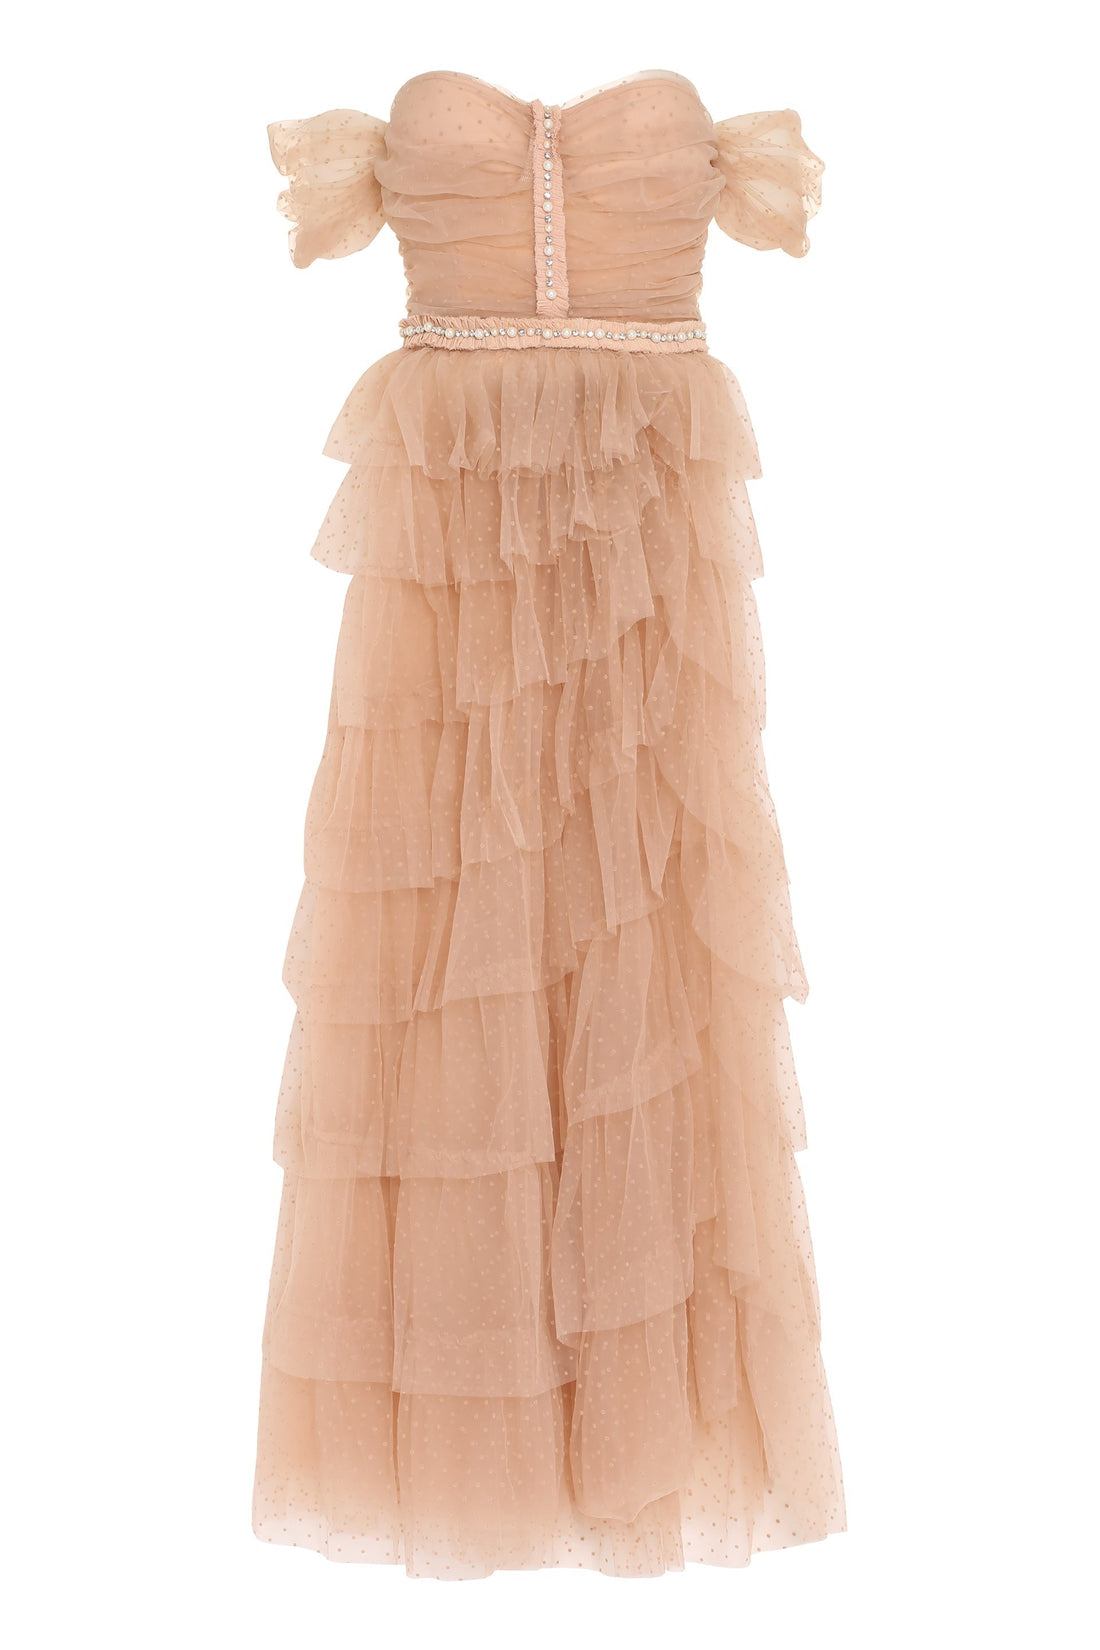 Elisabetta Franchi-OUTLET-SALE-Ruffled skirt tulle dress-ARCHIVIST